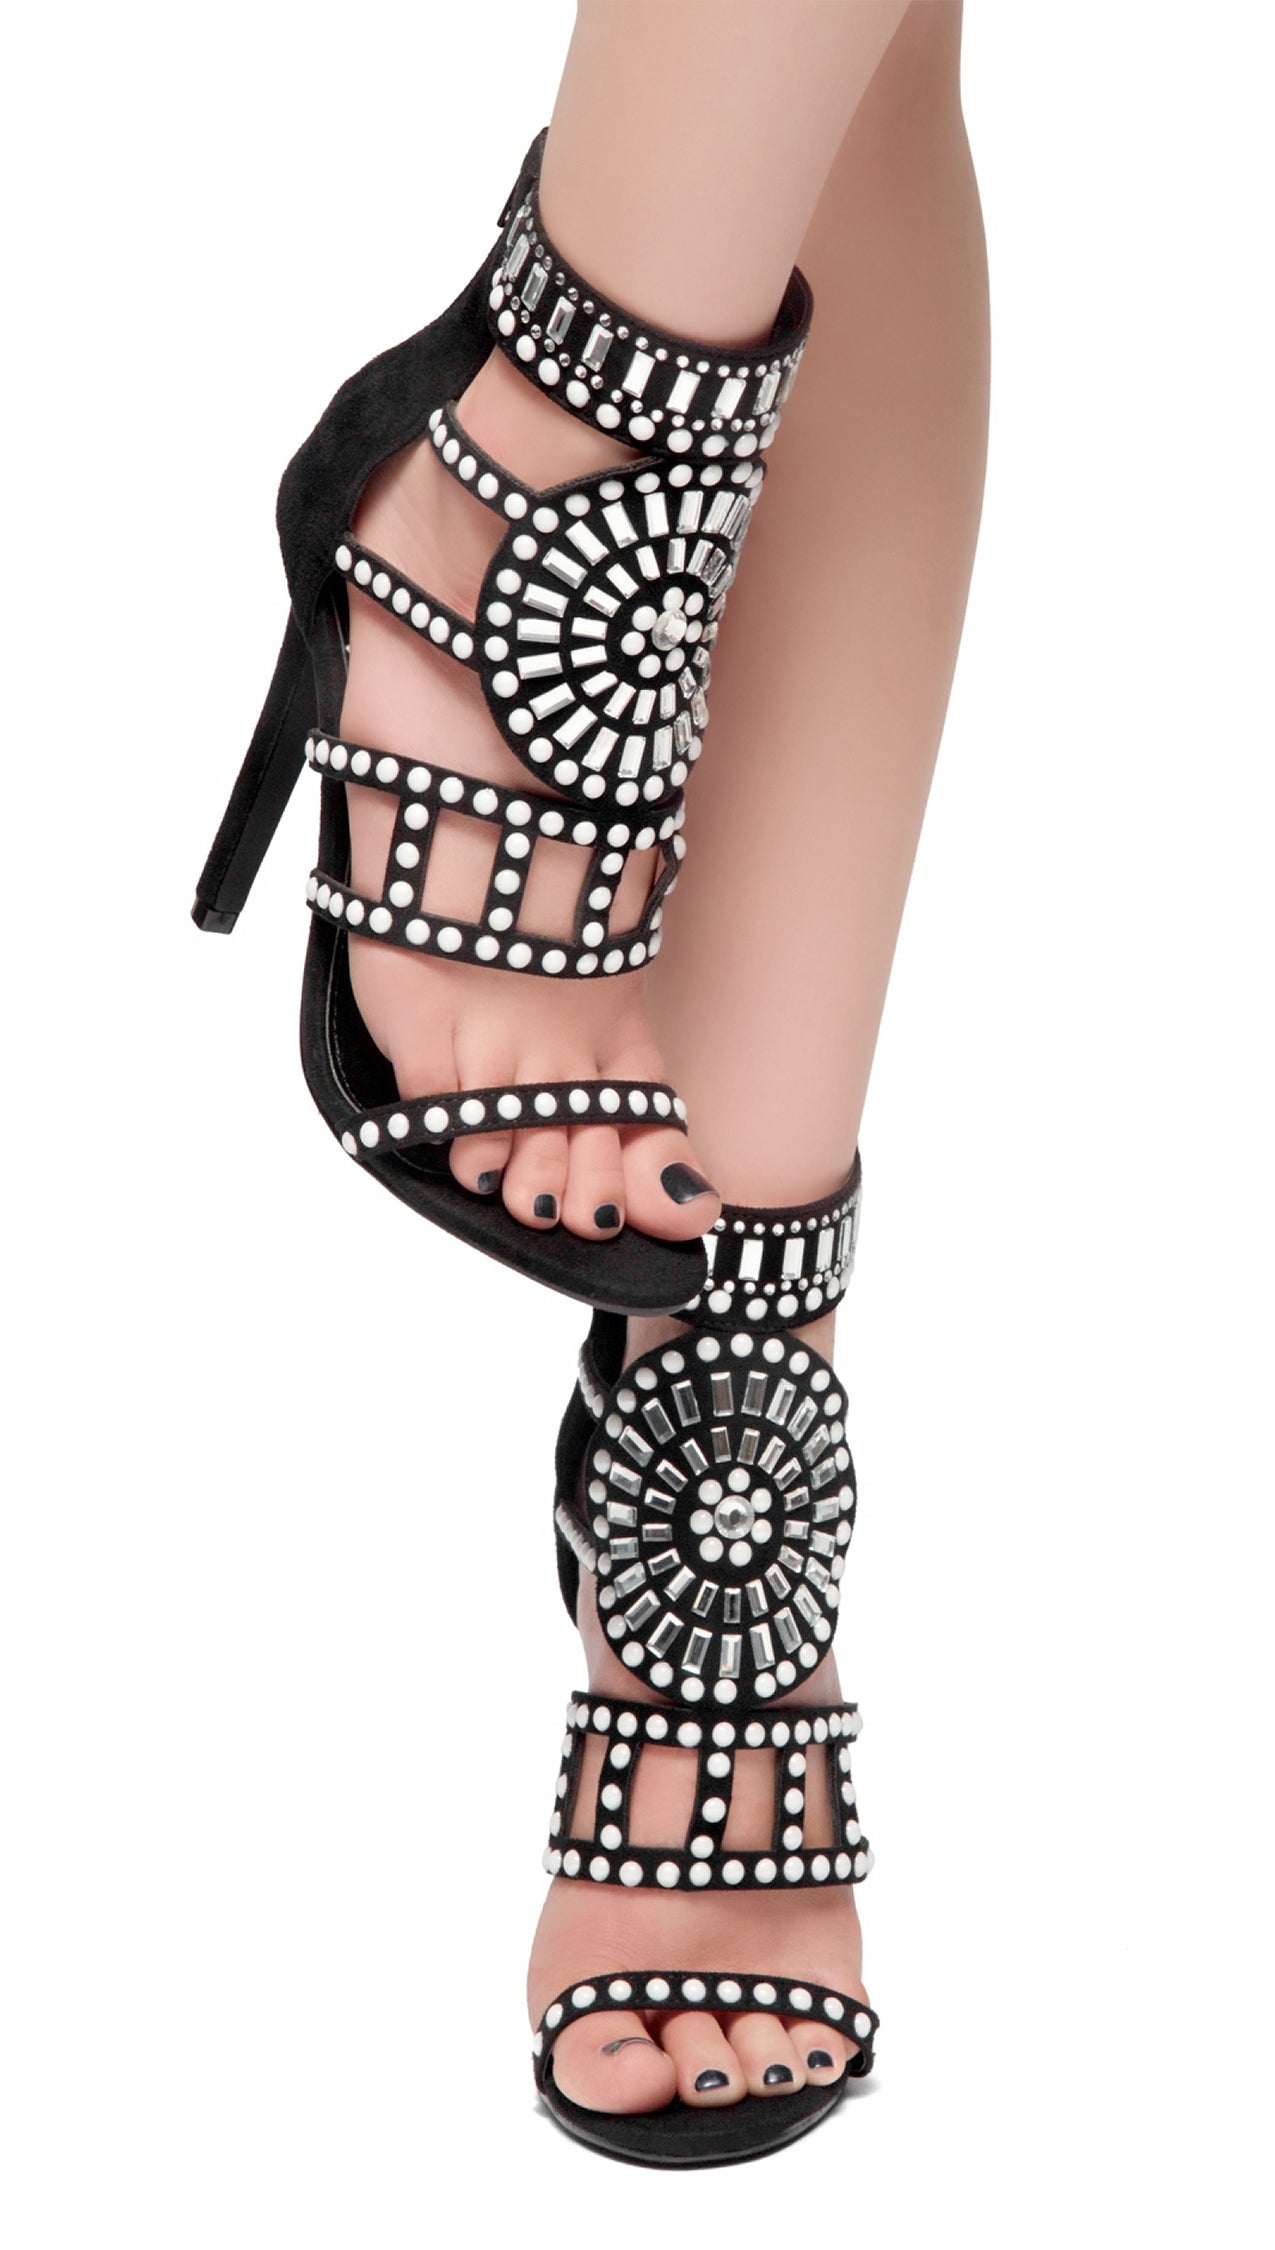 Buy UUNDA Fashion Sandals for Women Pencil Heel Sandals Shoes Woman High  Heels Ladies Sandals (Black, 2) at Amazon.in